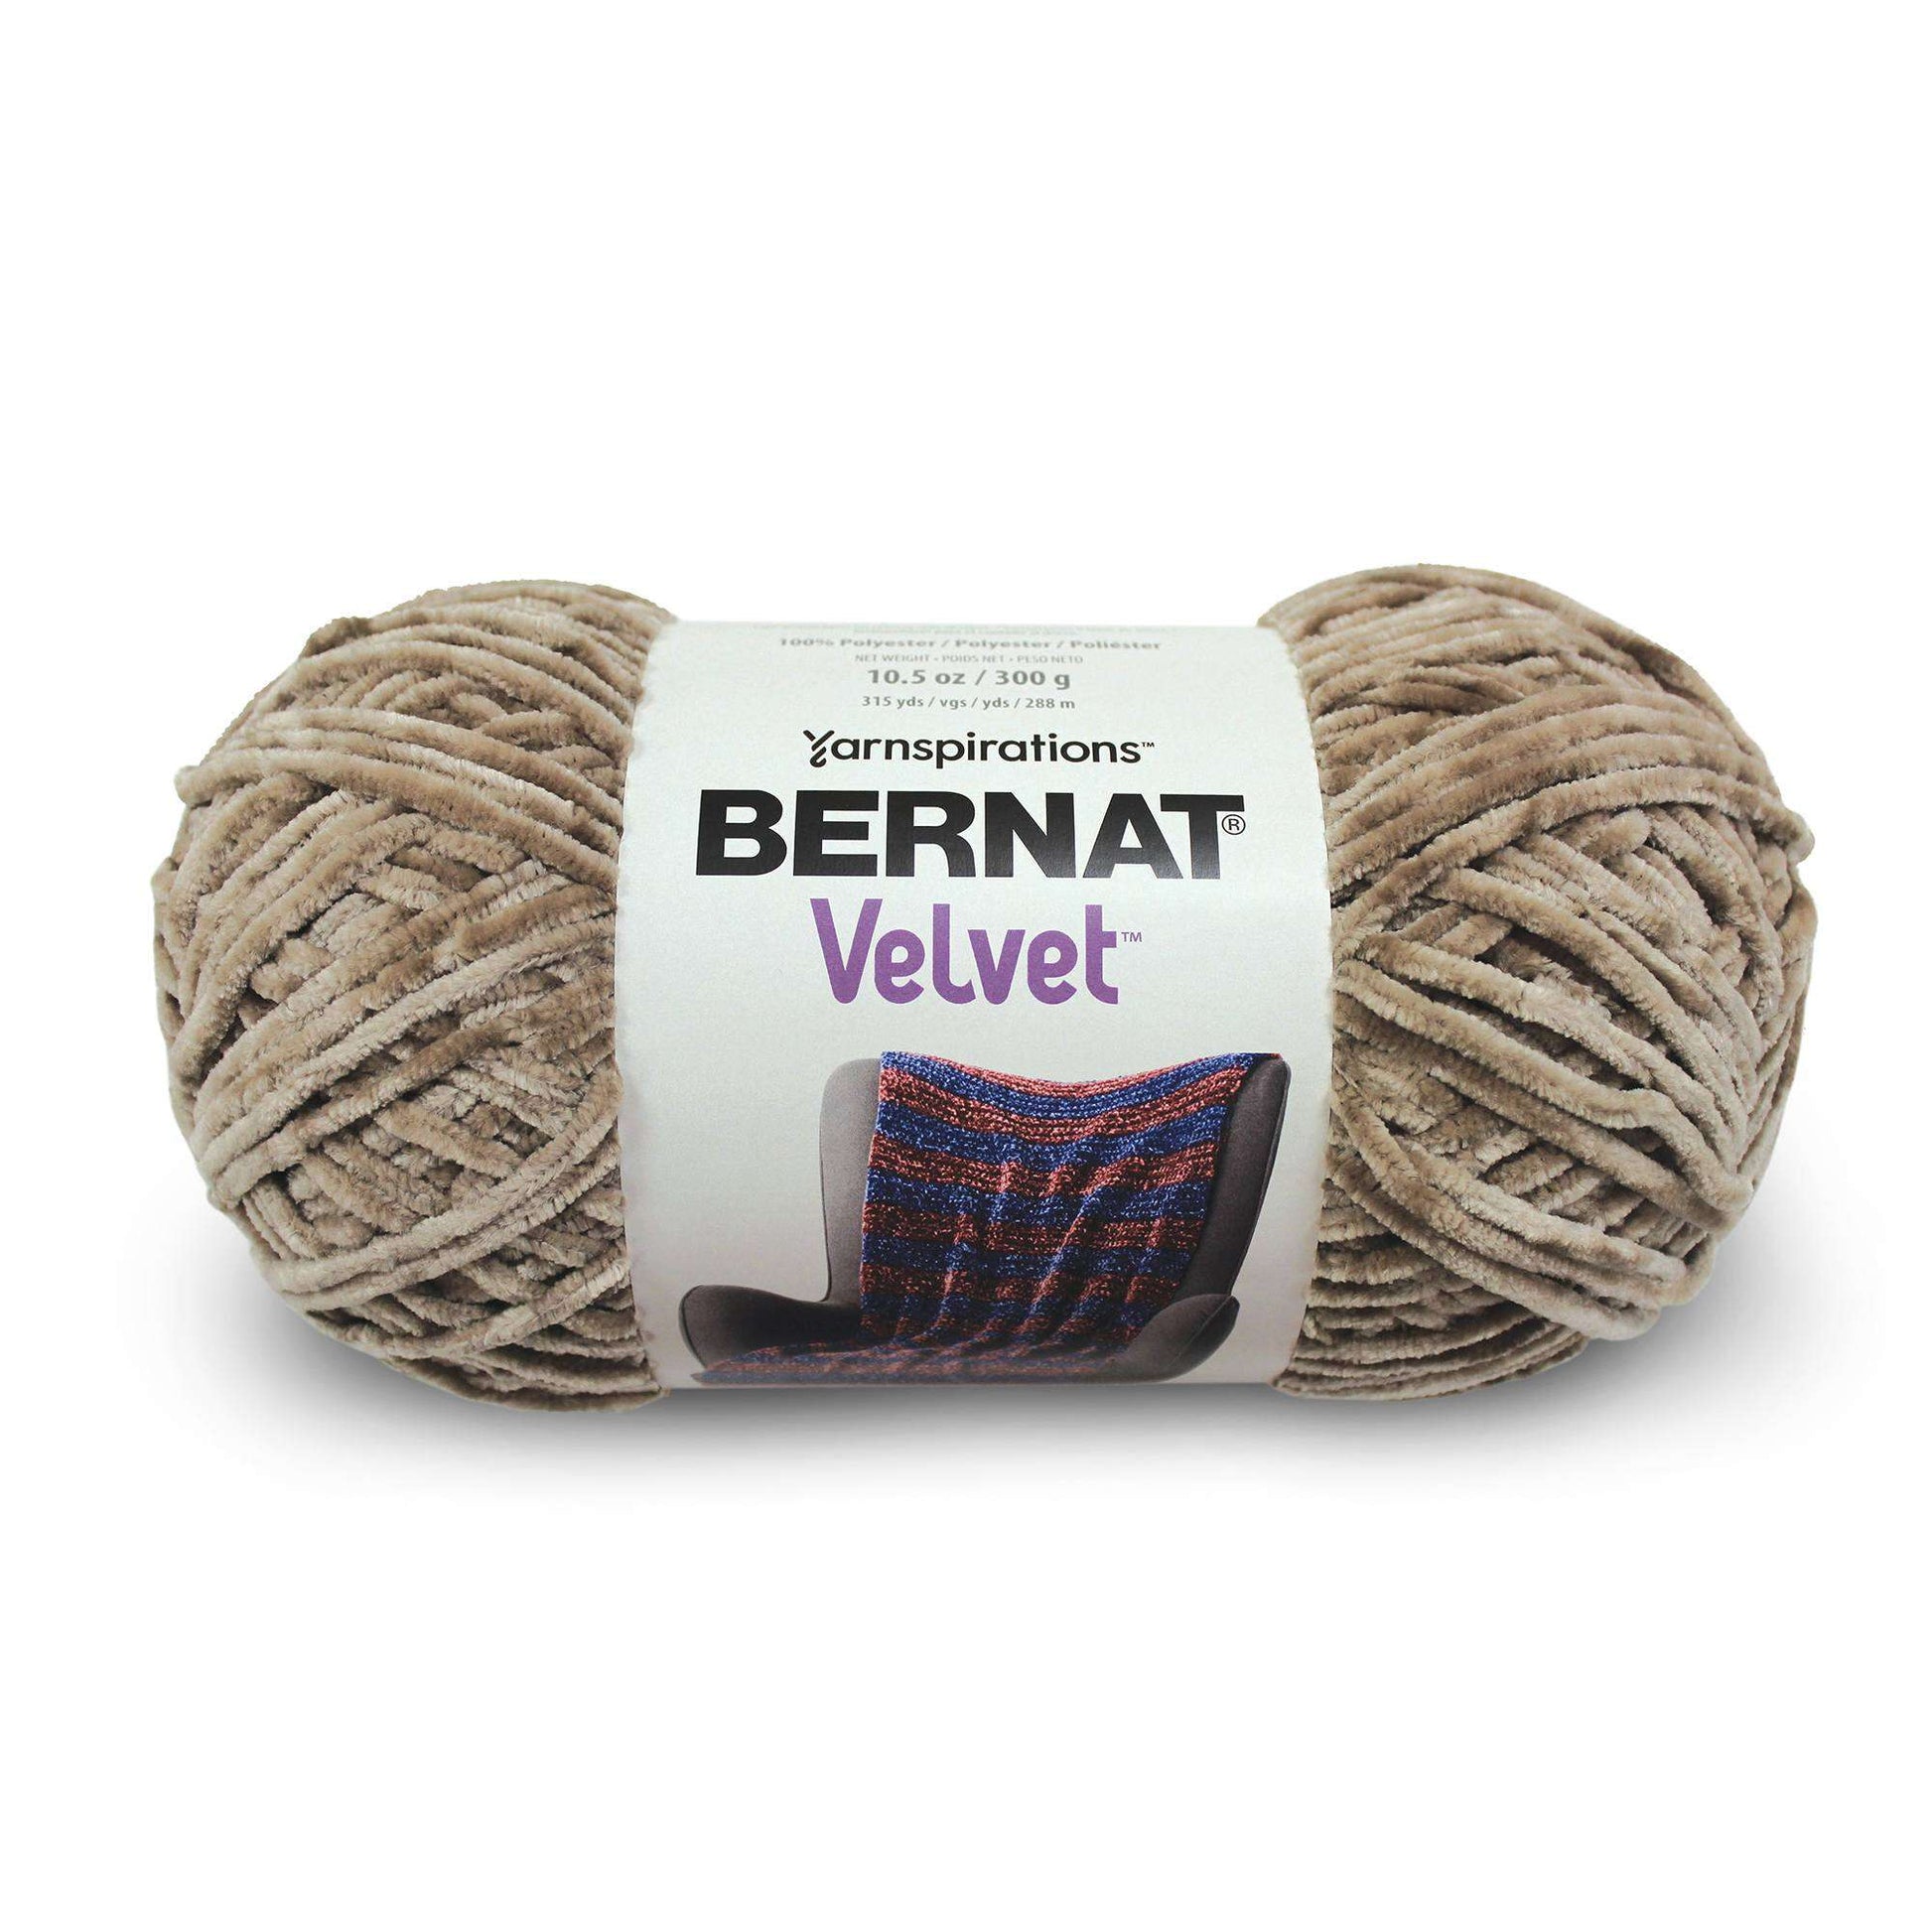 Bernat Velvet Yarn Review — Summerbug Crafts